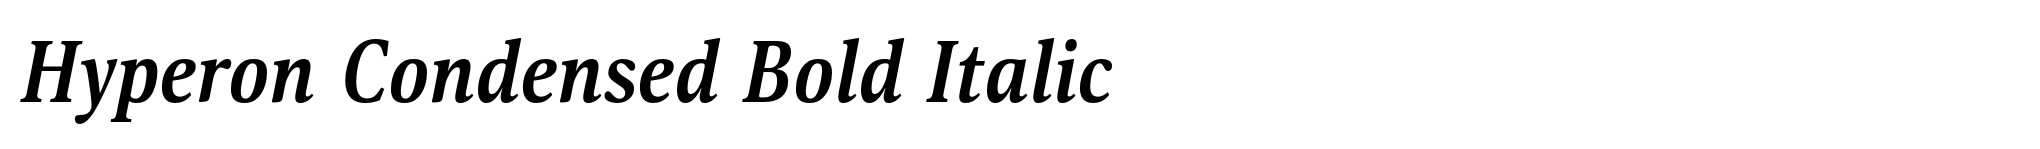 Hyperon Condensed Bold Italic image